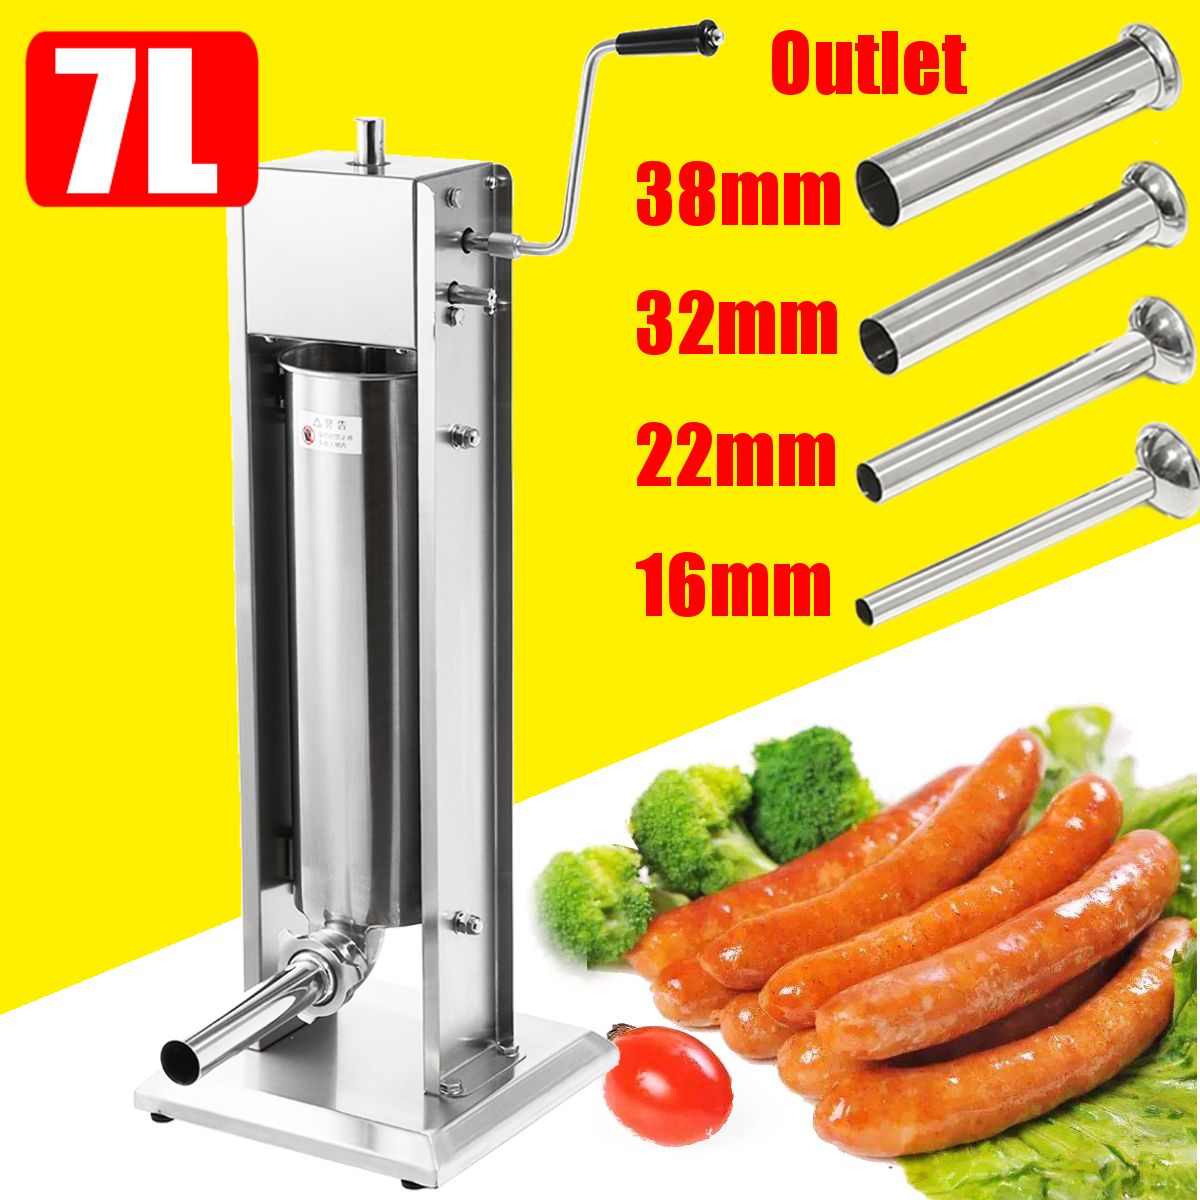 7L-Stainless-Steel-Meat-Sausage-Filler-Stuffer-Maker-Filler-Press-Machine-Vertical-Grinter-1387833